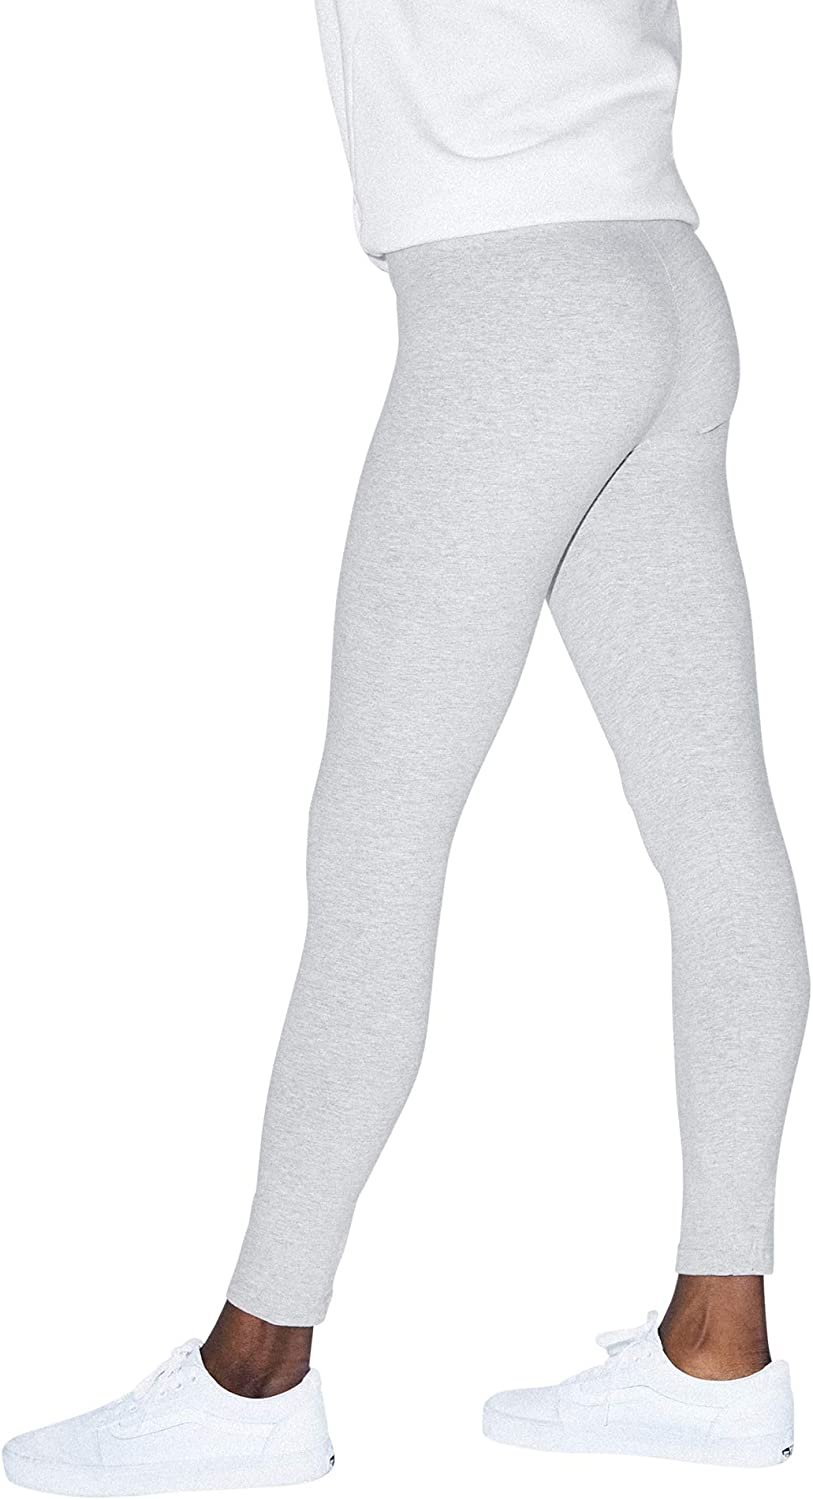 American Apparel Women's Cotton Spandex Jersey Legging, Navy, Medium